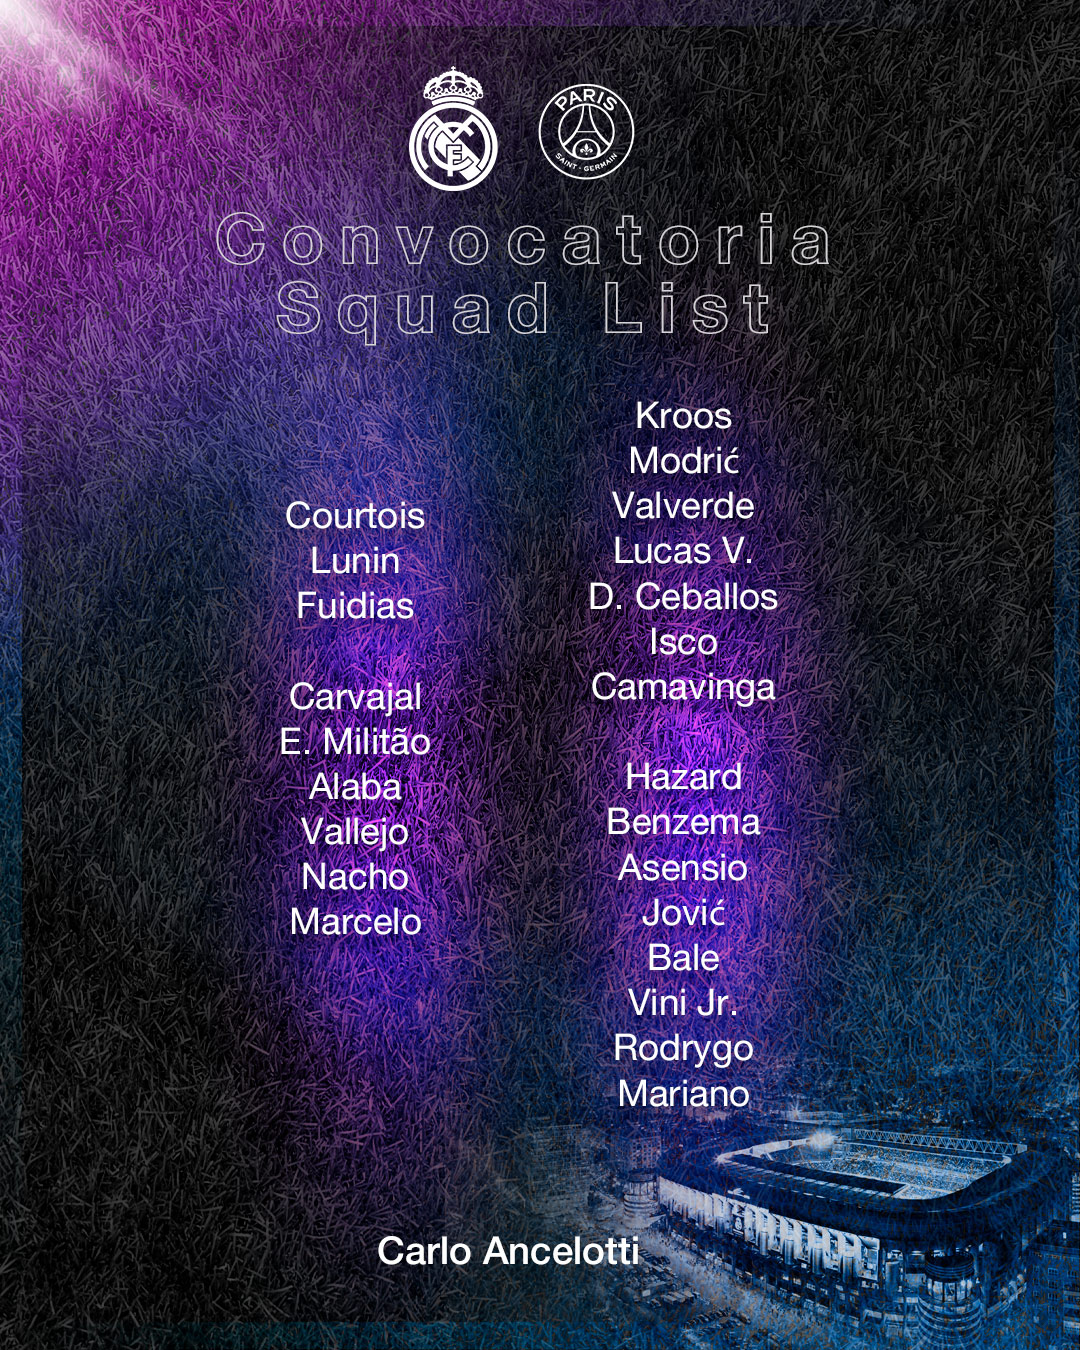 Lista de convocados de Real Madrid para vuelta con PSG por Champions League 2022.